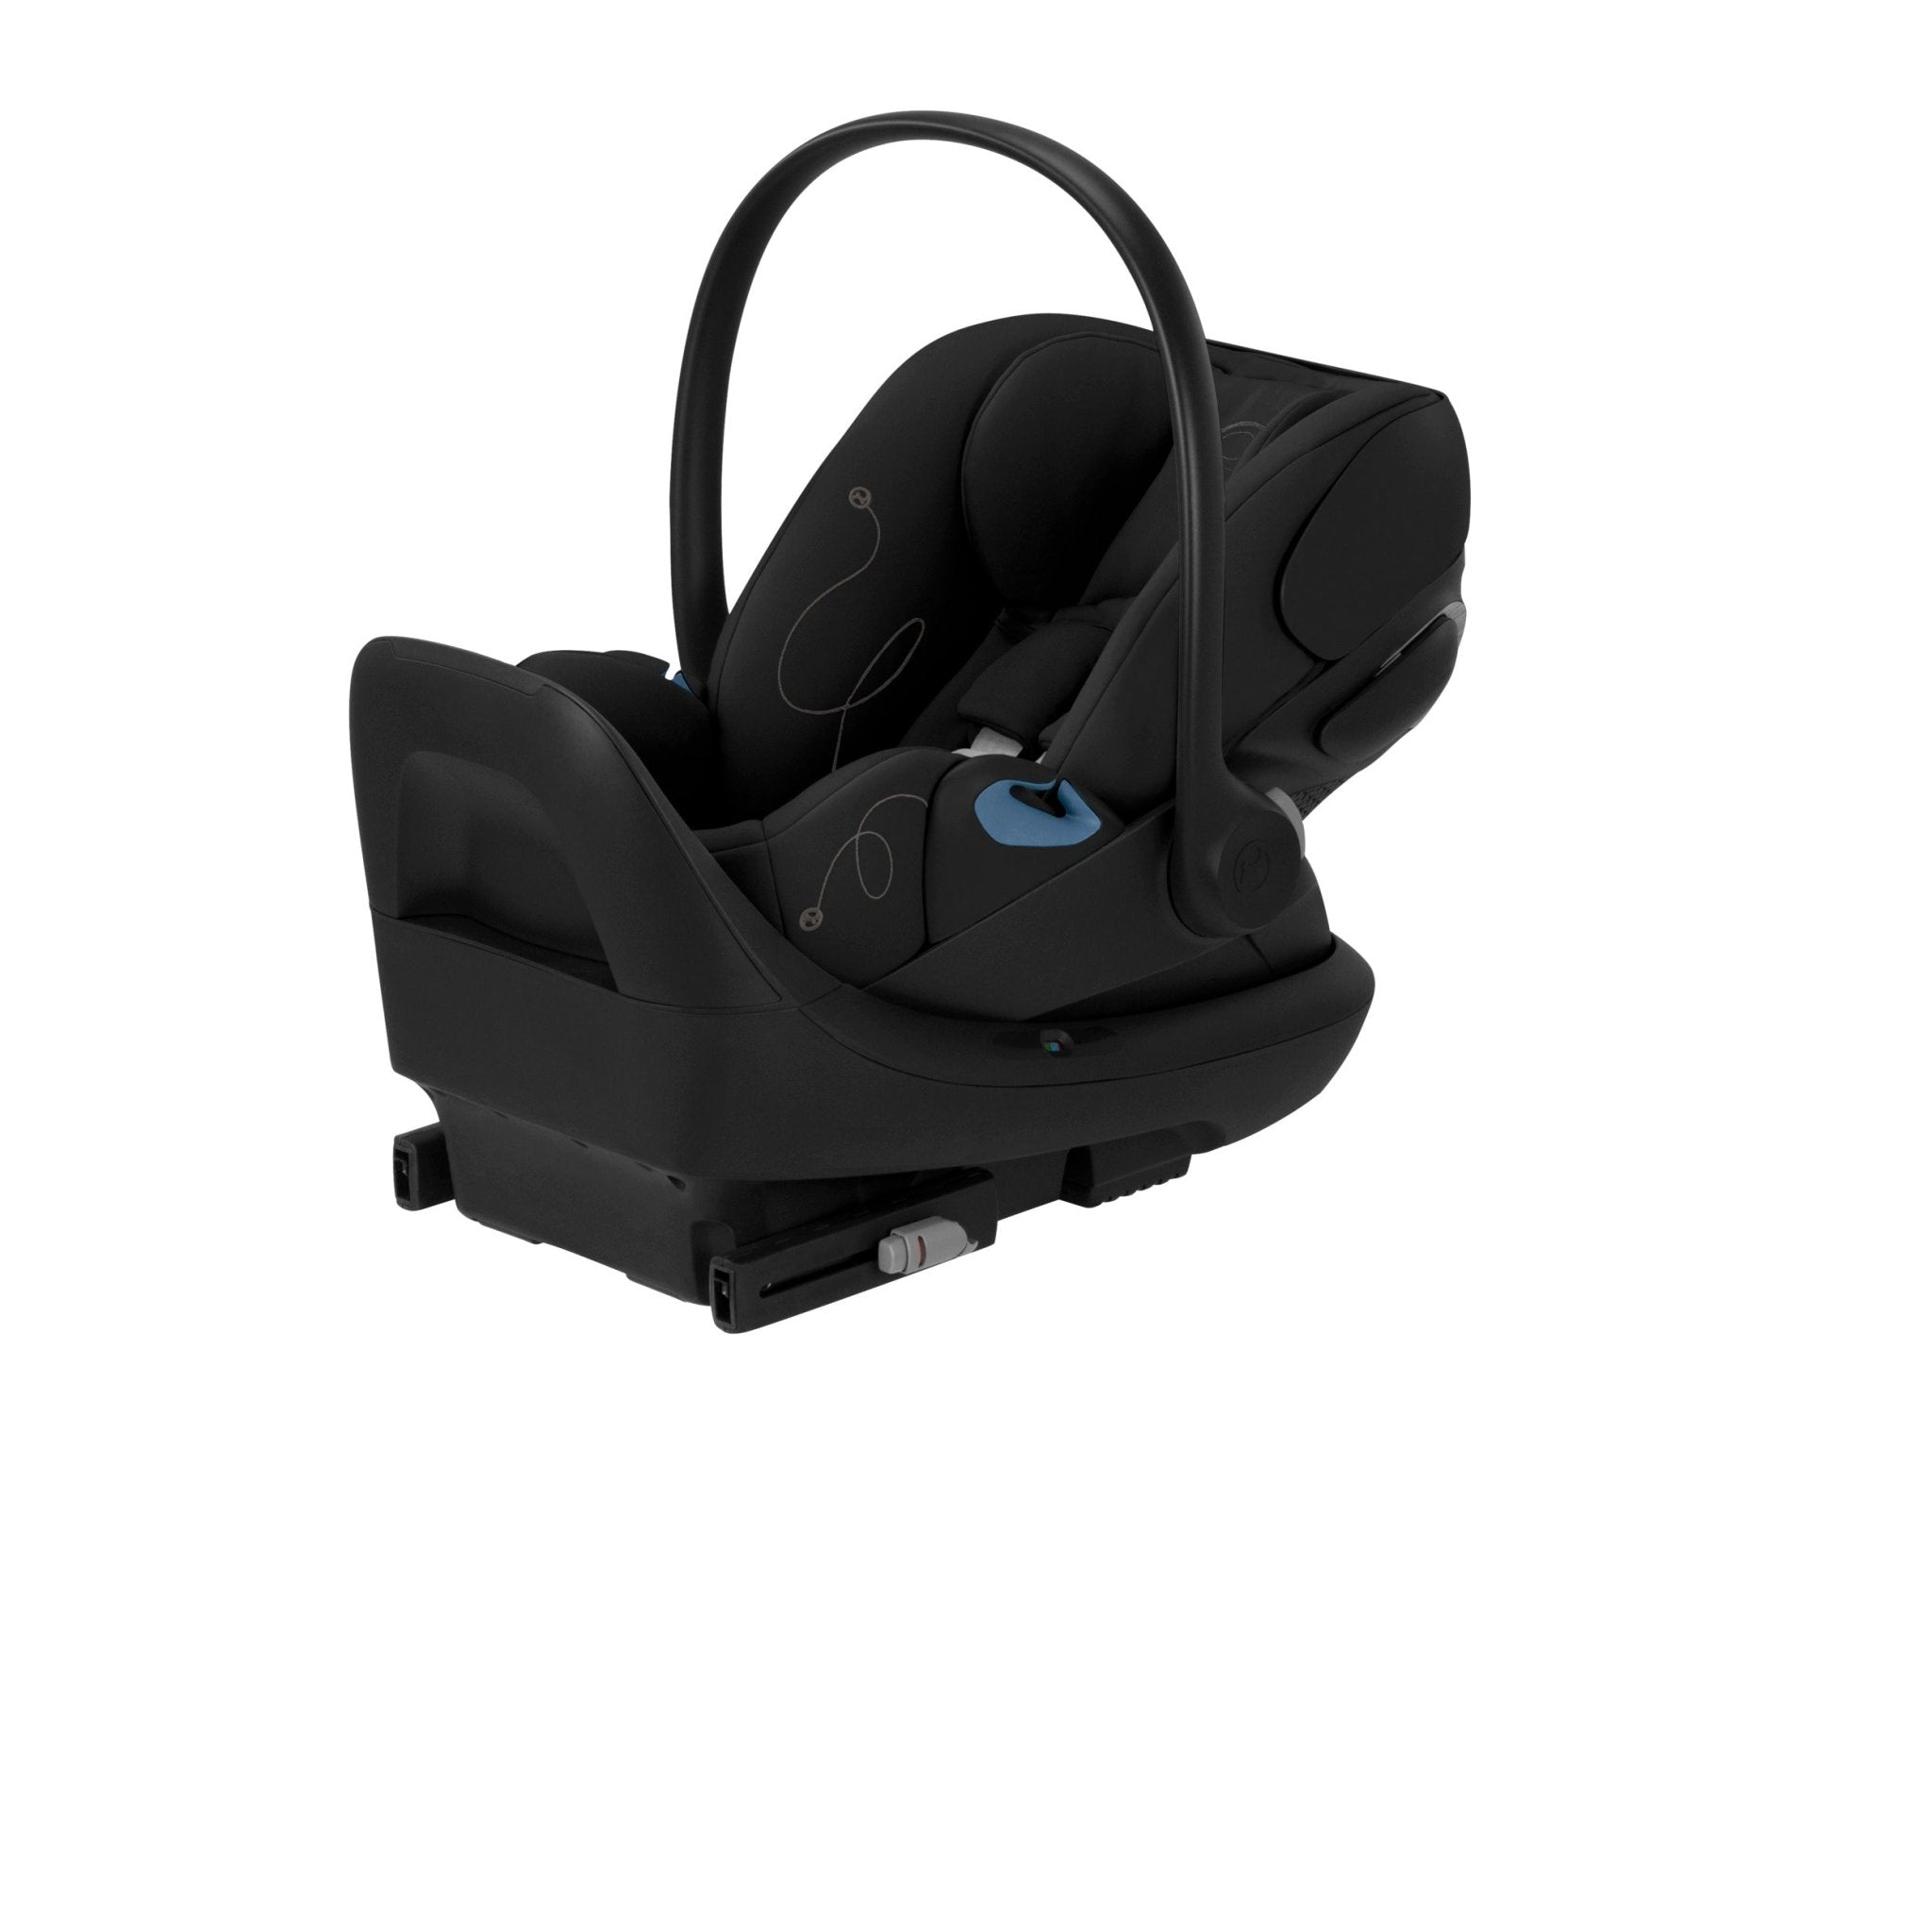 Cybex Cloud G Infant Car Seat - ANB Baby -4063846282616$300 - $500